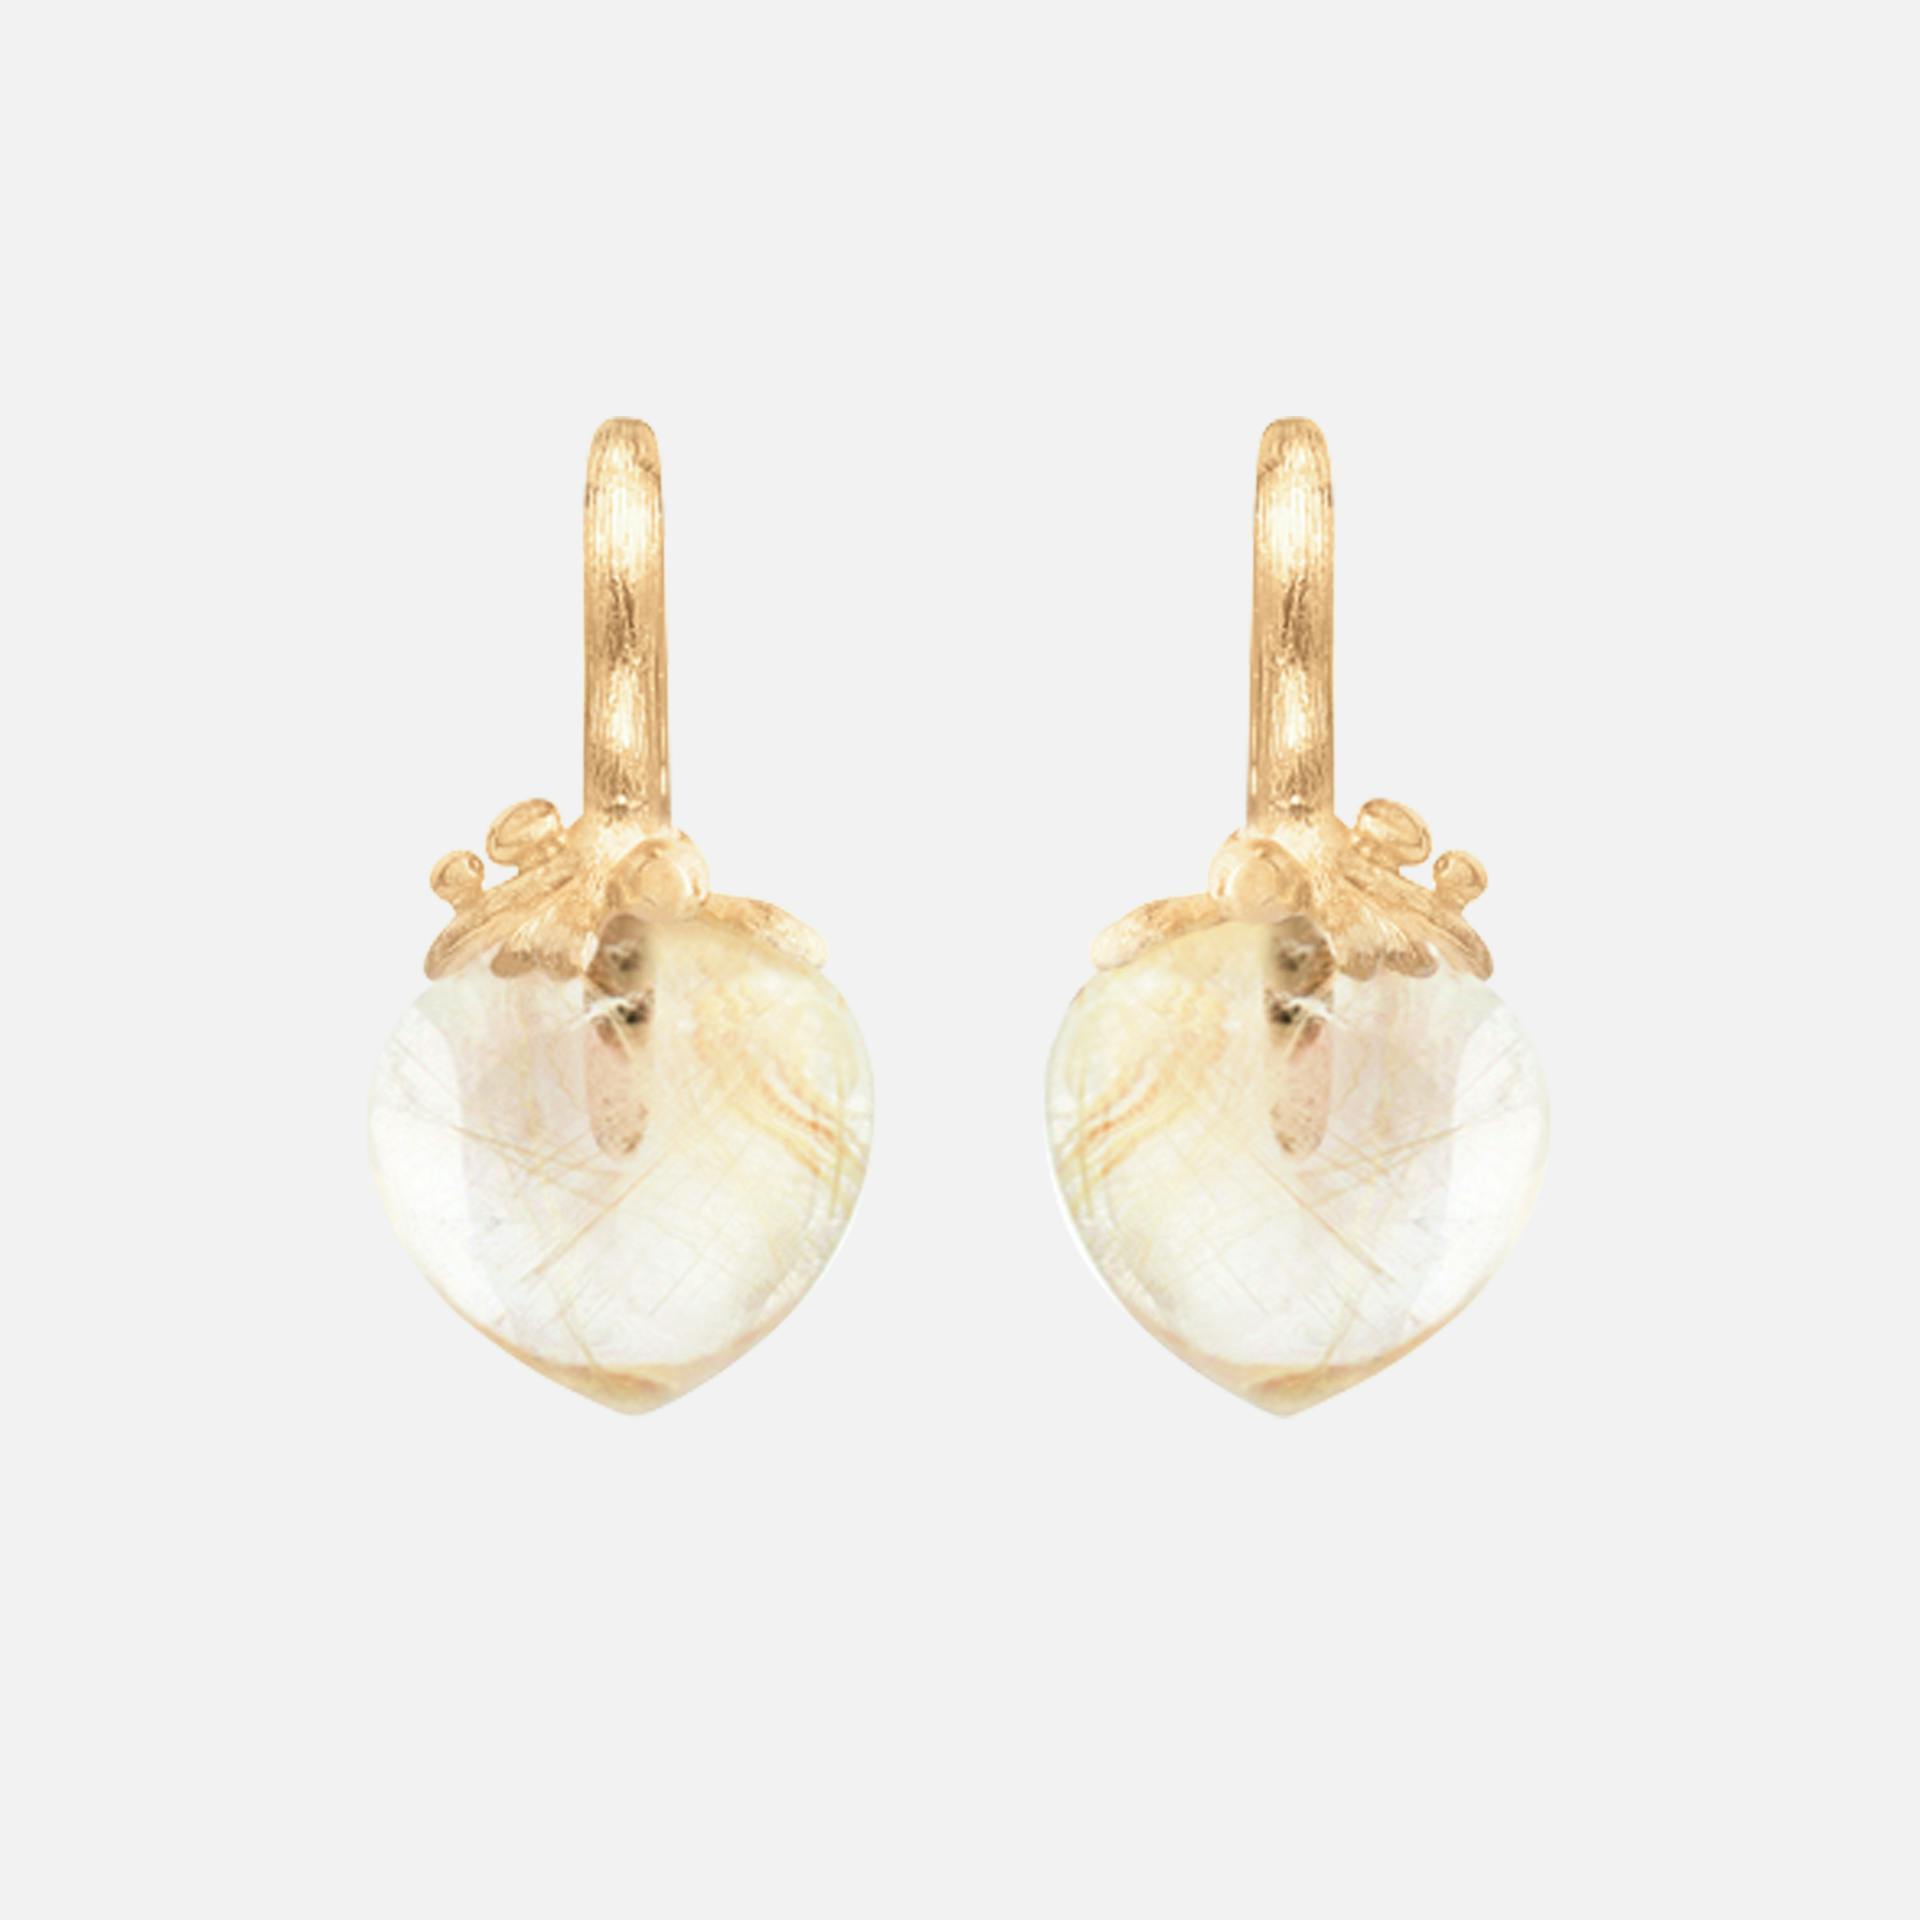 Dew drops filigree earrings 18k gold with rutile quartz